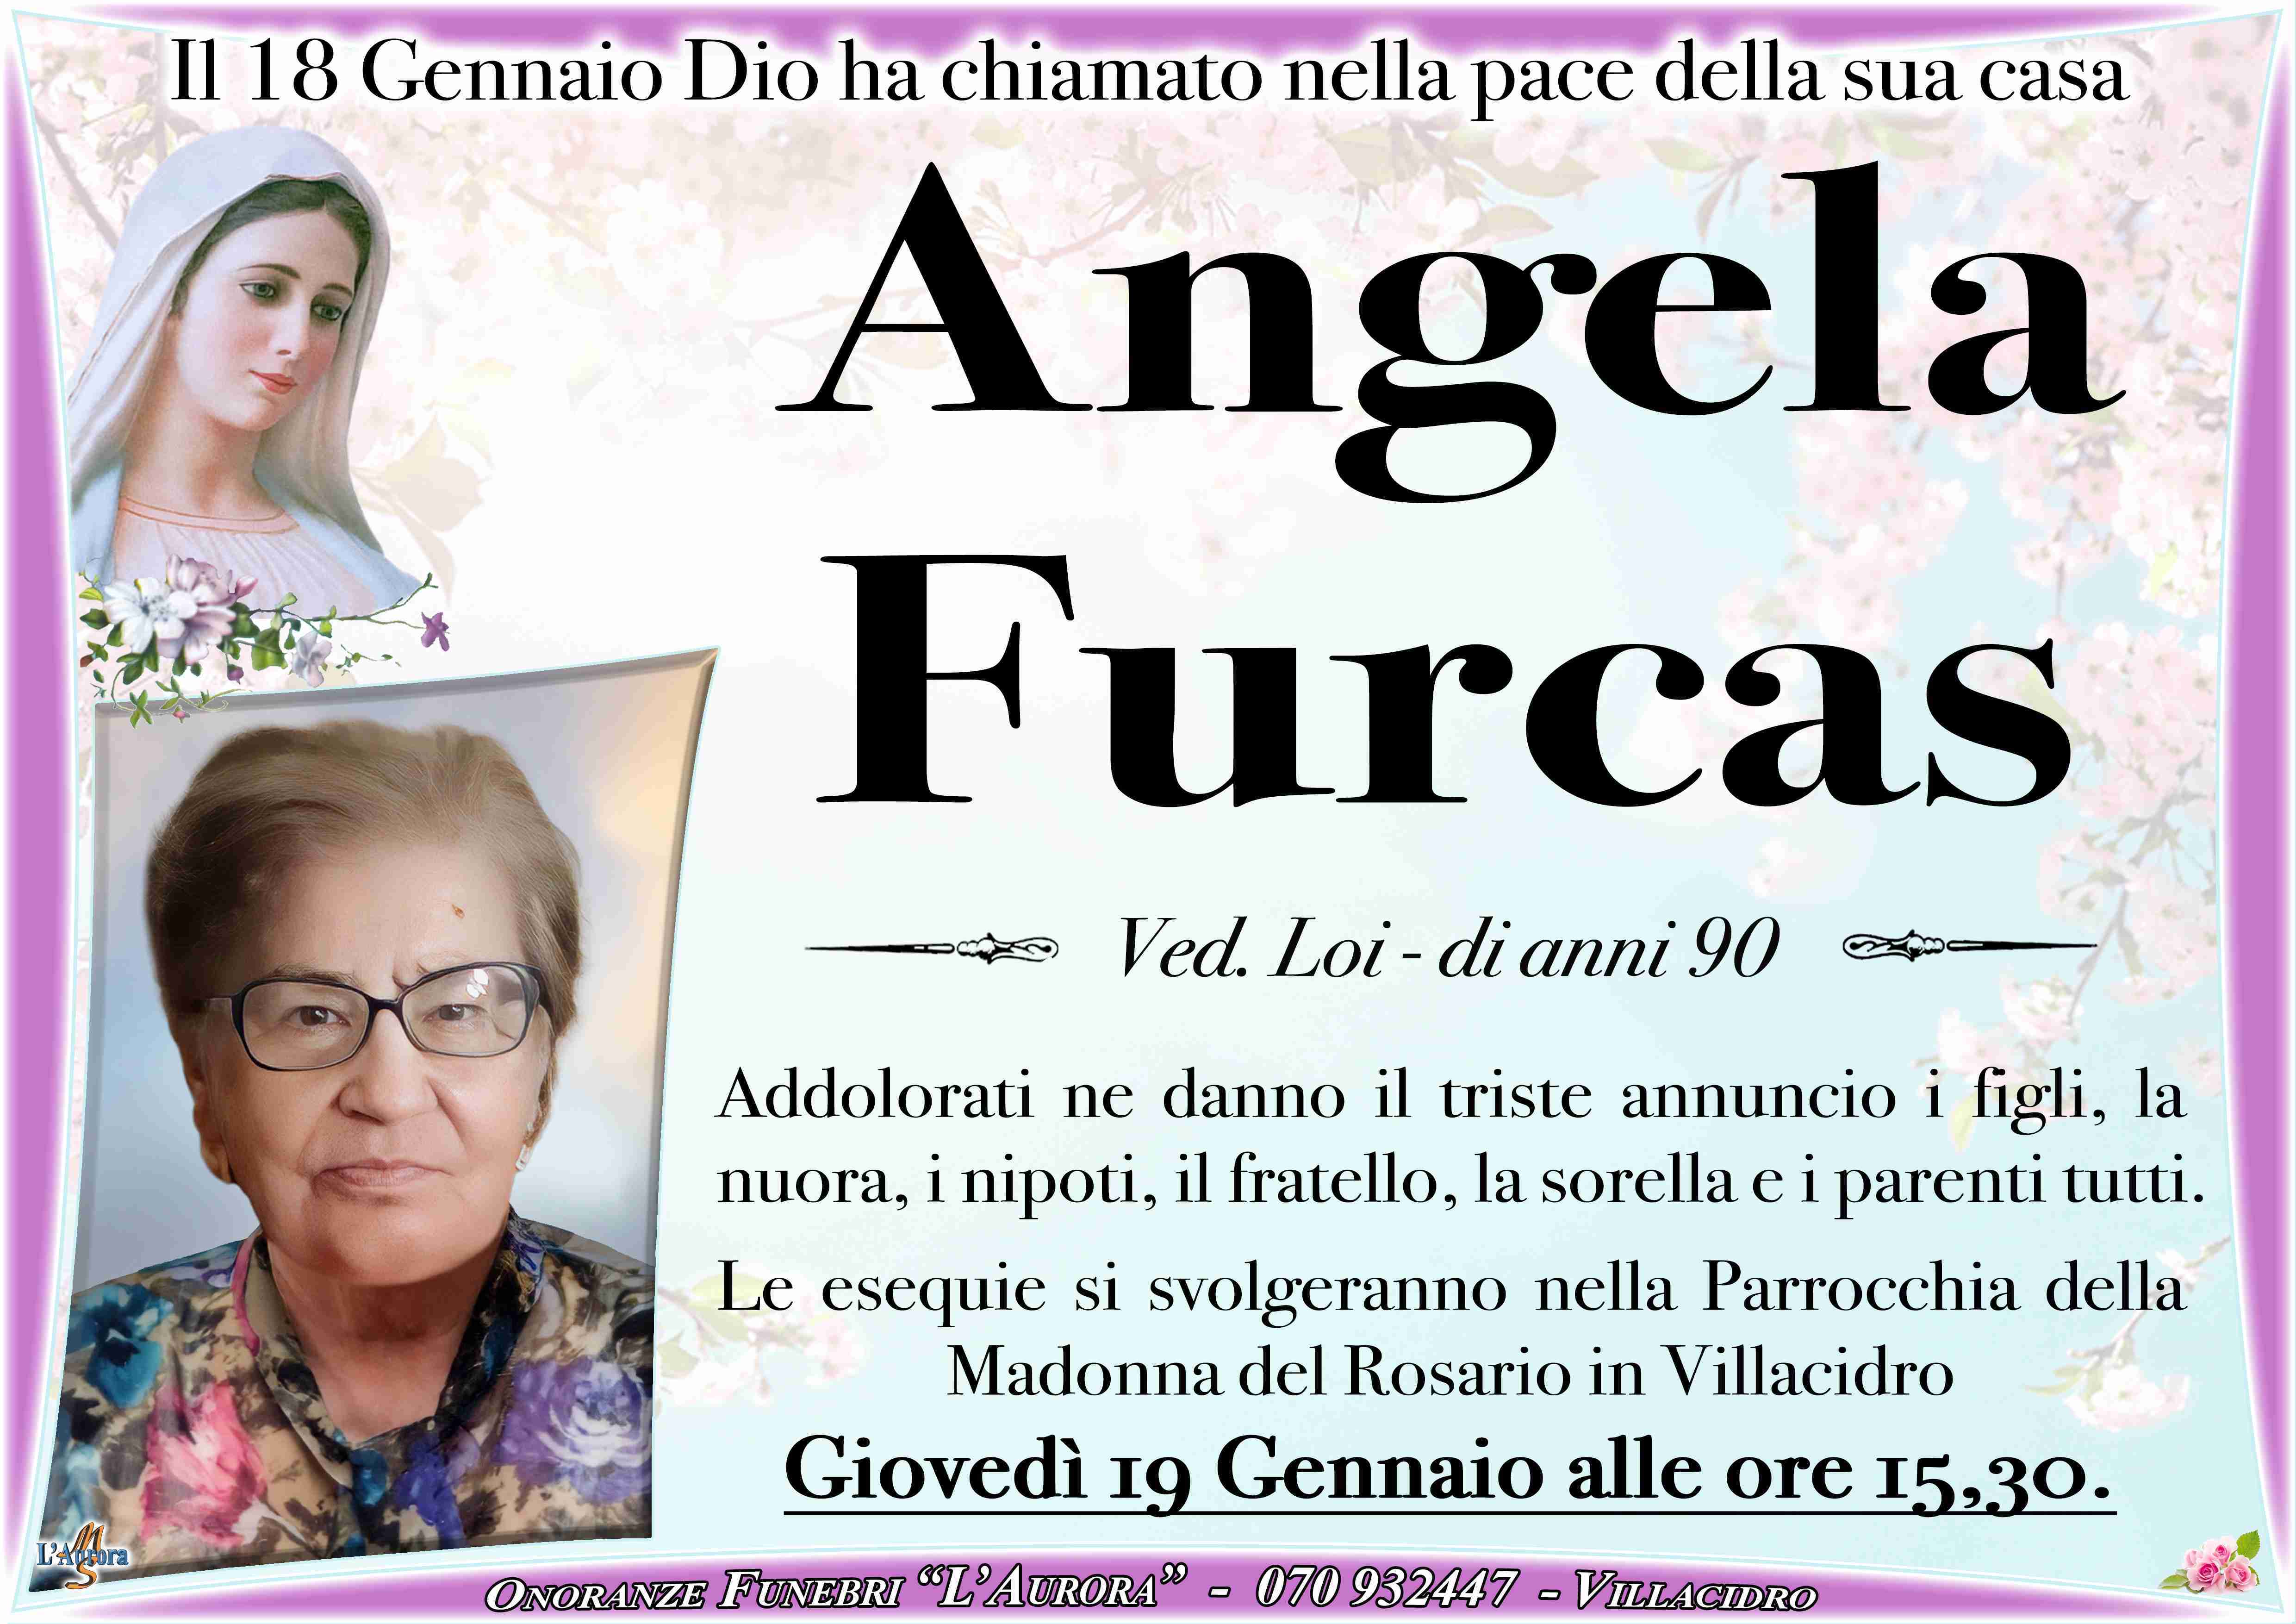 Angela Furcas